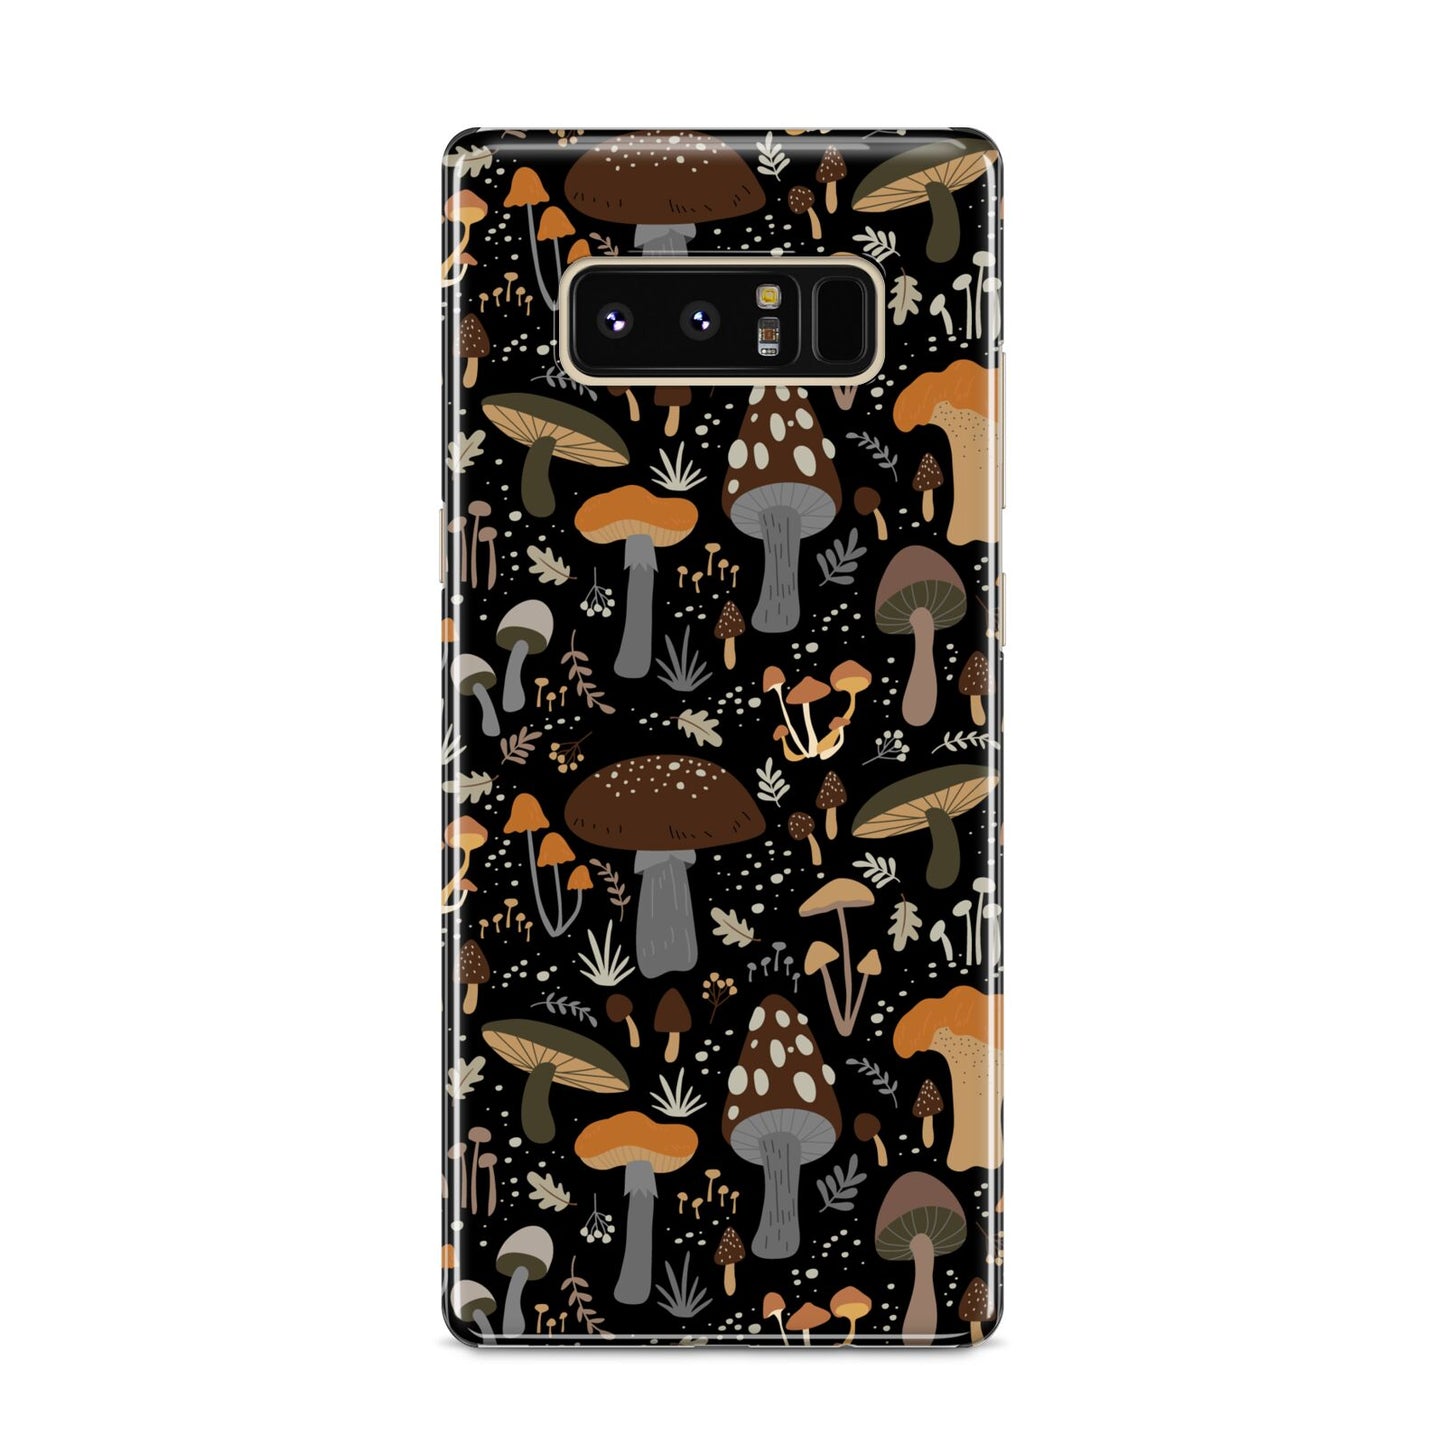 Mushroom Samsung Galaxy S8 Case